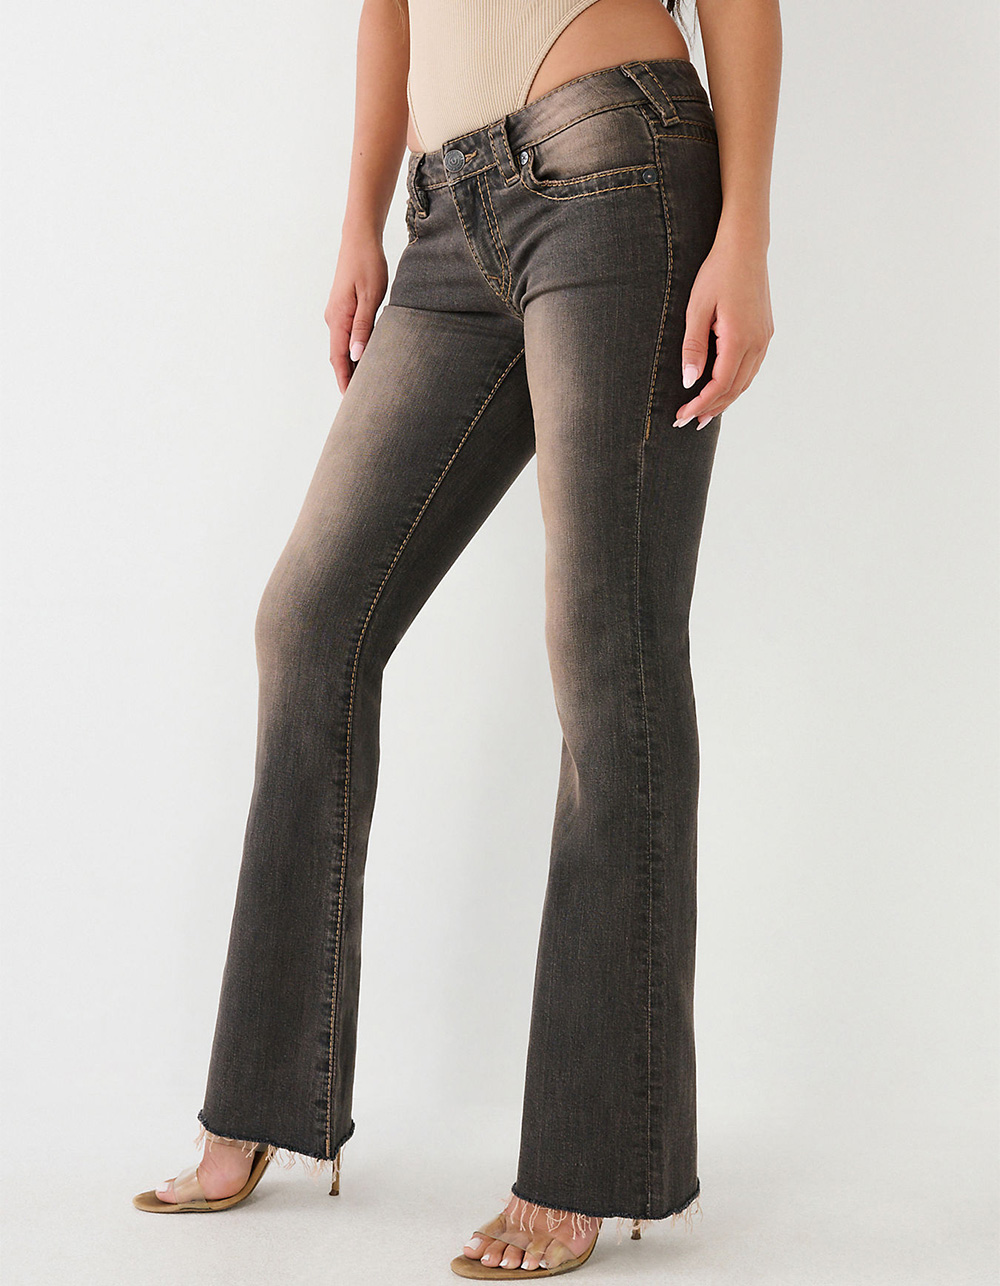 TIANEK Bootcut Jeans for Women Fashion Full-Length Jeans for Women